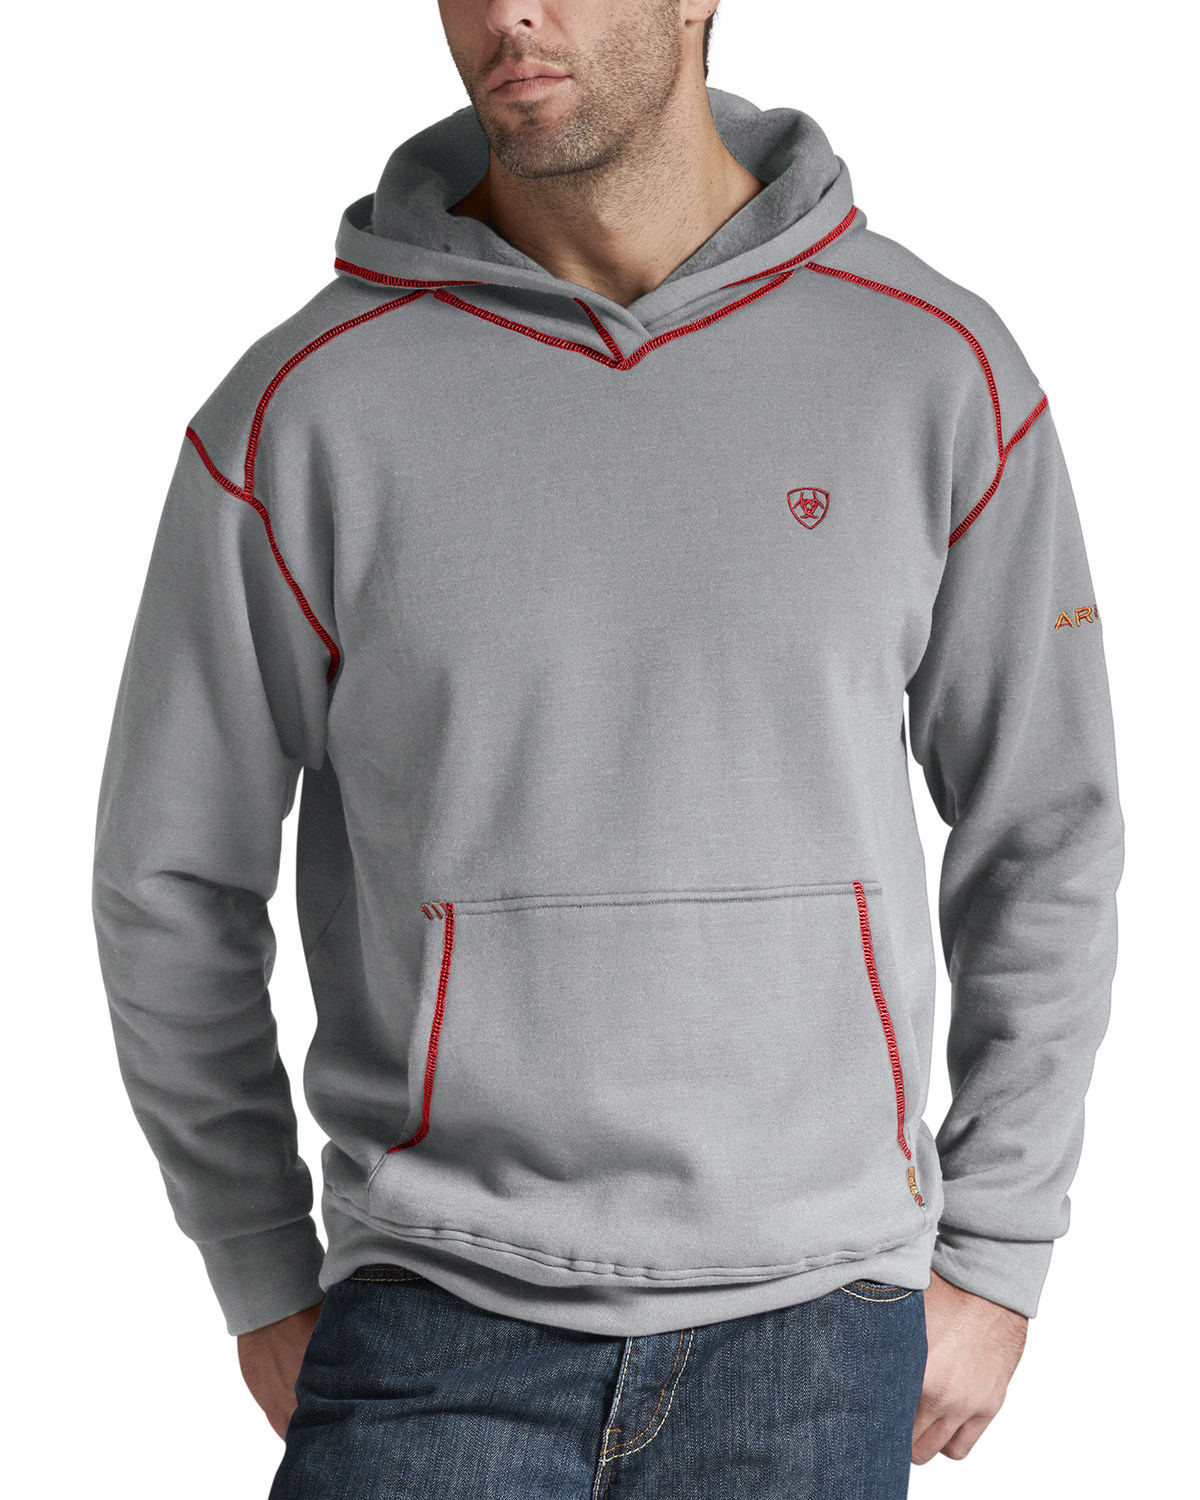 Ariat Men's Flame Resistant Polartec Grey Work Hooded Sweatshirt - Big and Tall